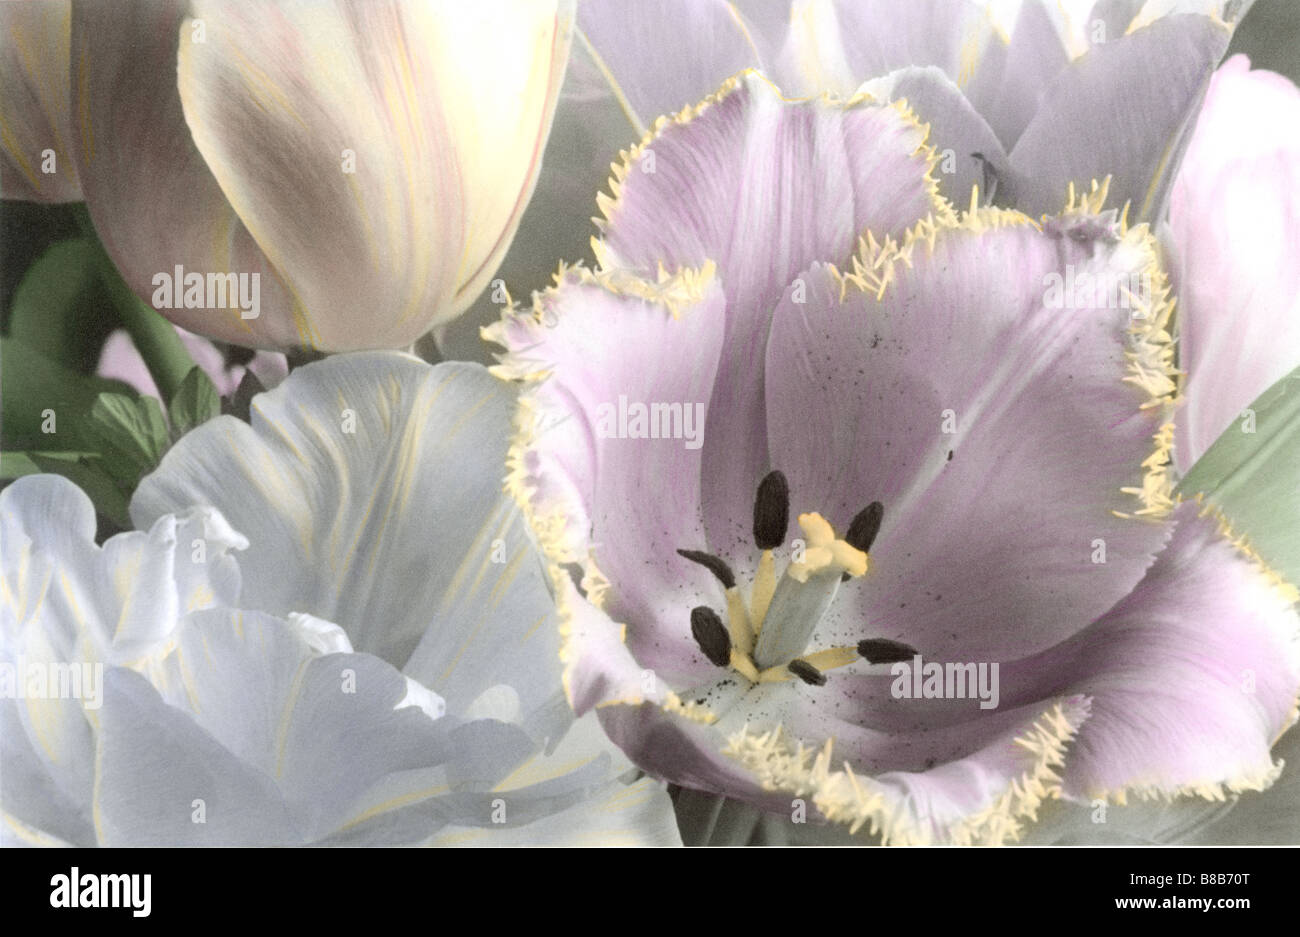 FV3942, Mary Ellen McQuay; Tulips, Close Up Stock Photo